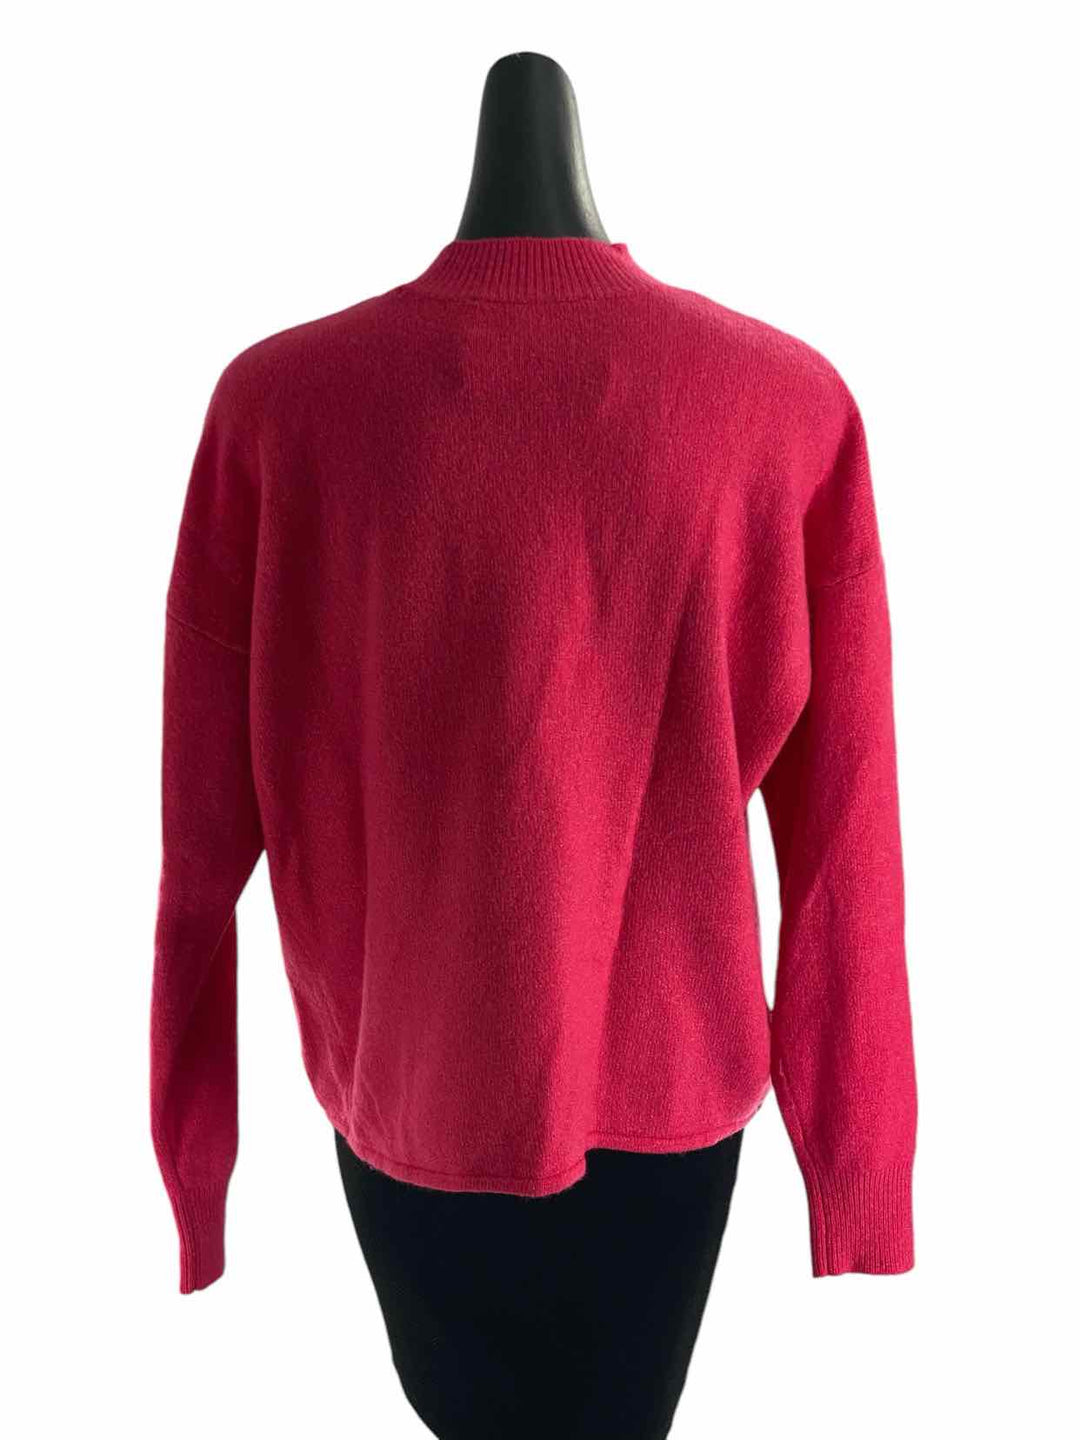 Loft Size L Hot Pink Sweater